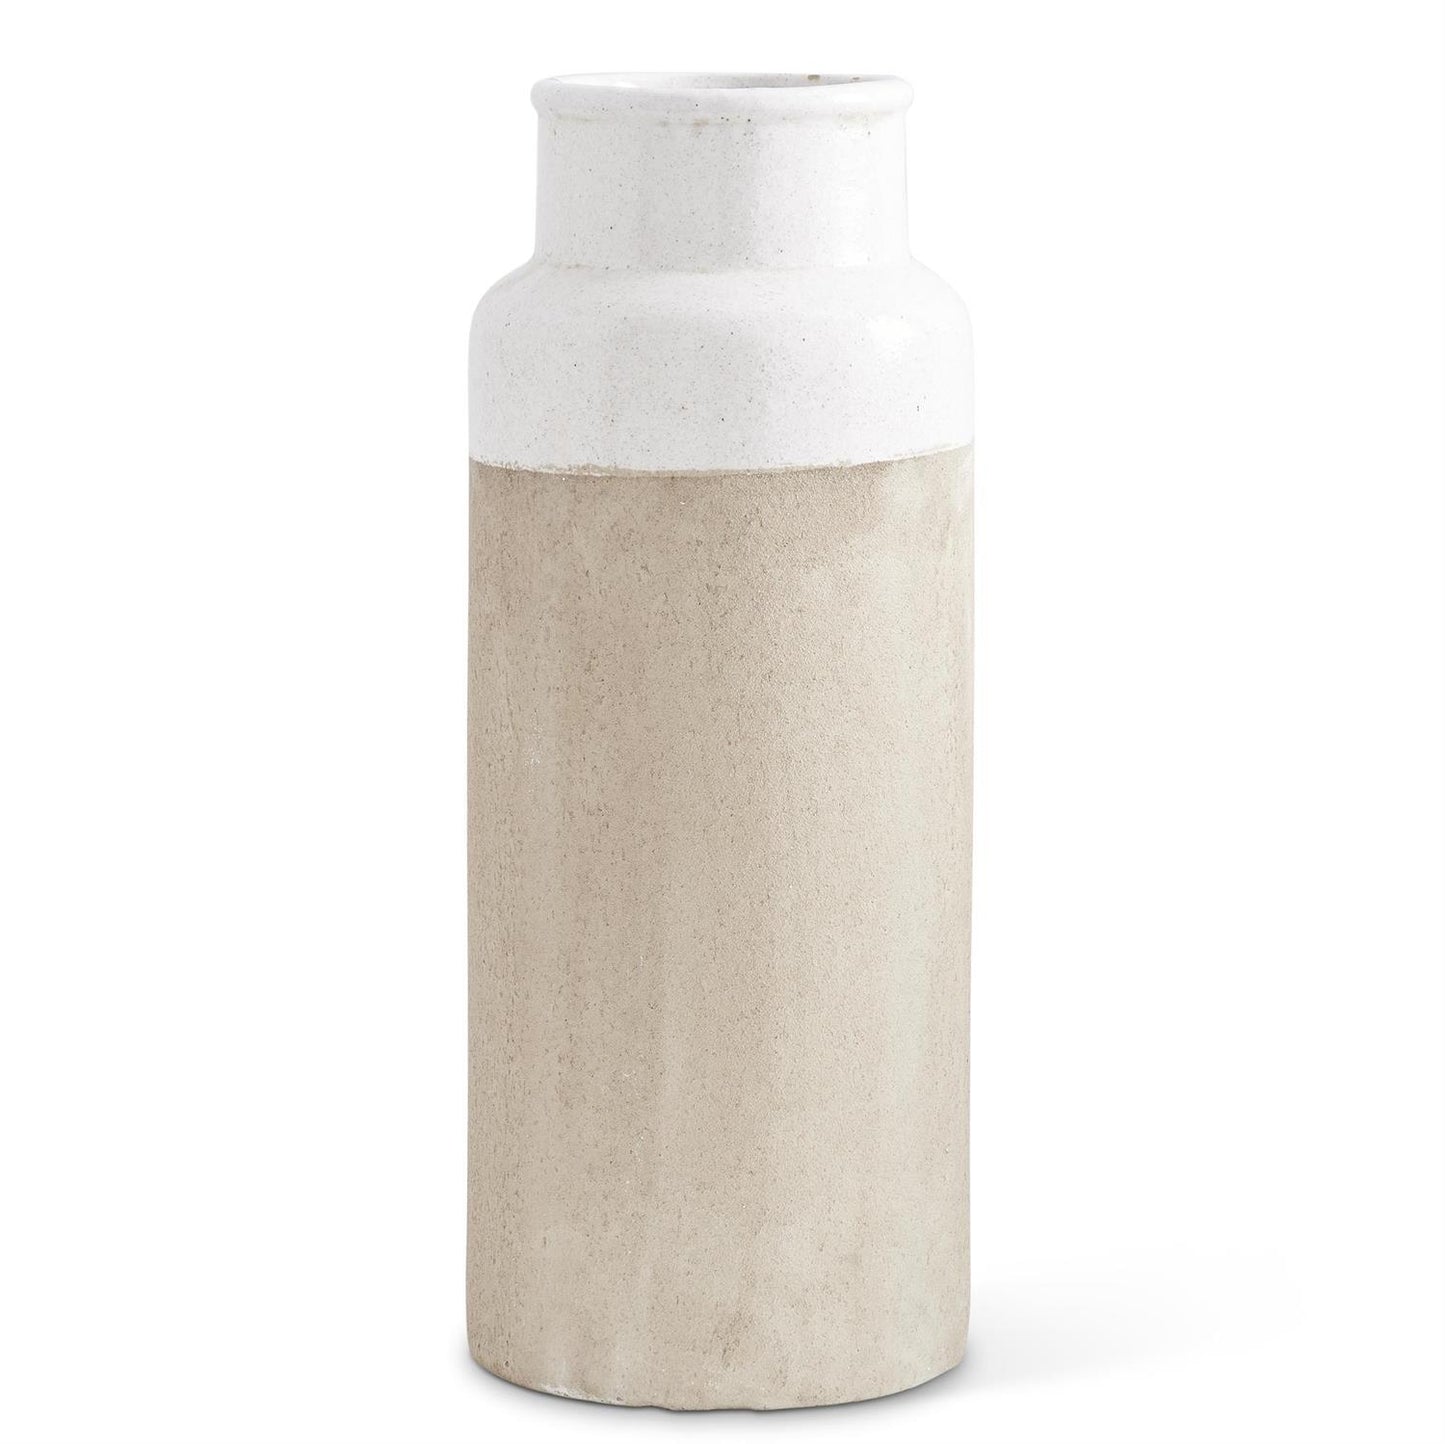 Ceramic Vases W/Light Glazed Top